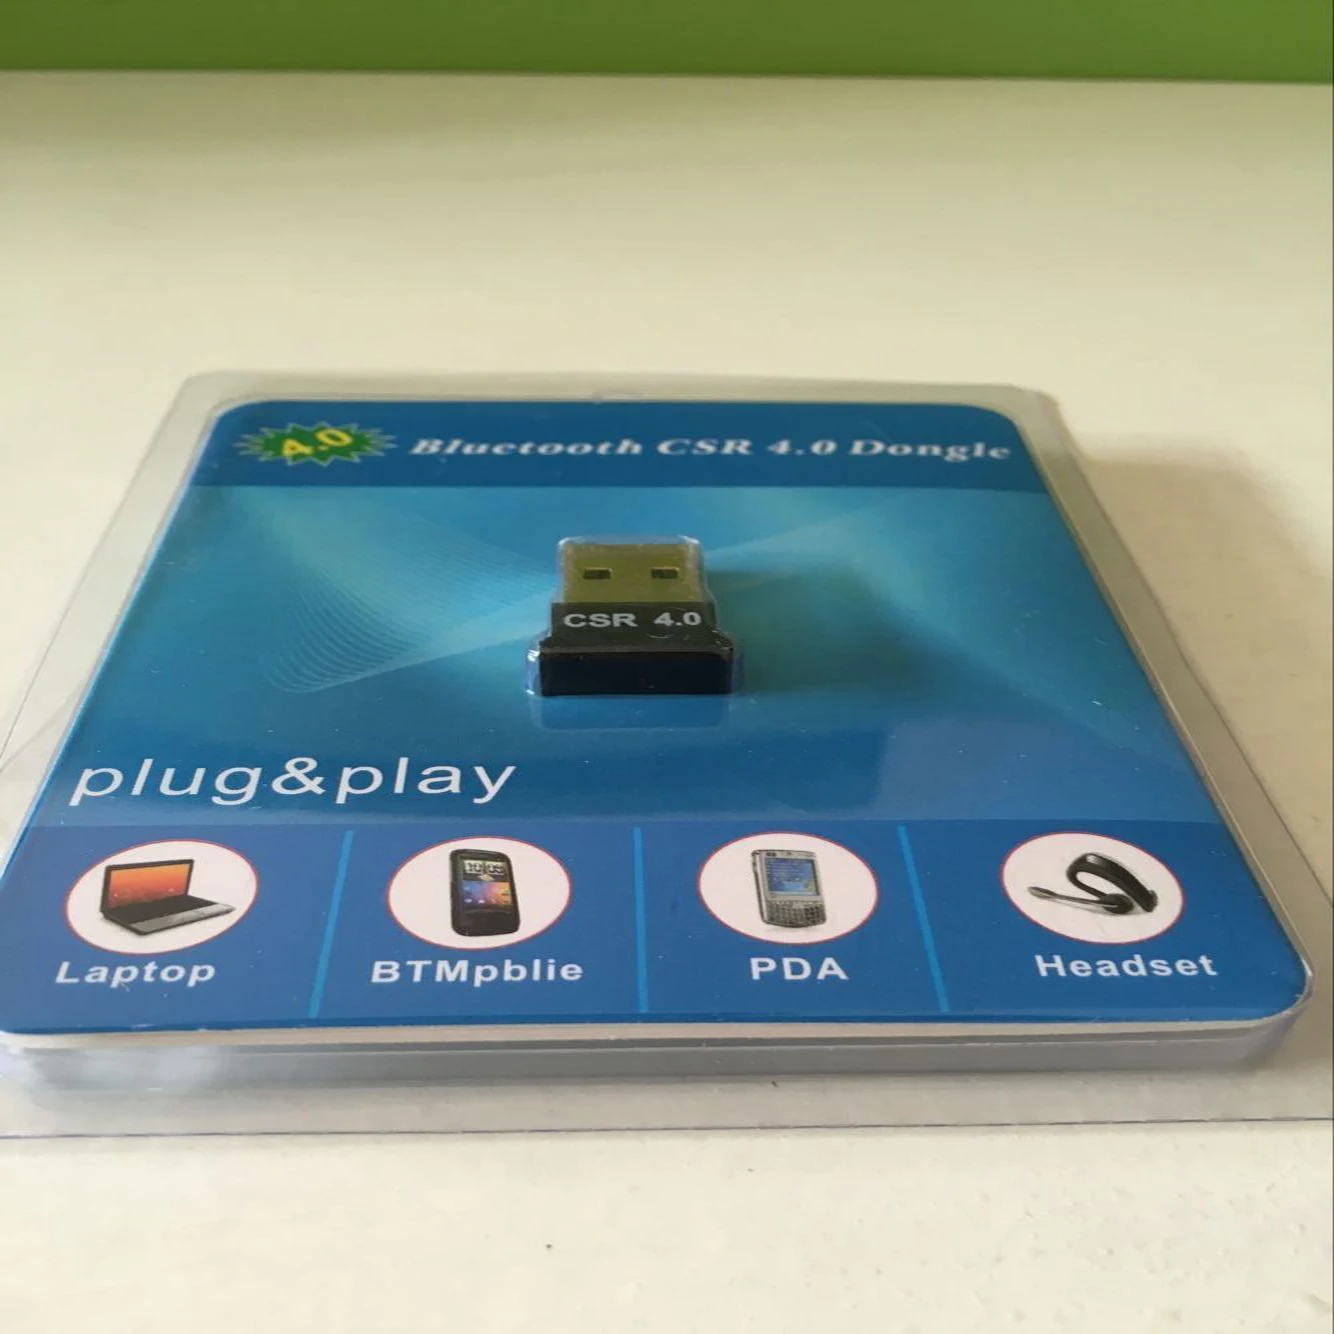 mini usb csr bluetooth 4.0 dongle adapter cd driver download